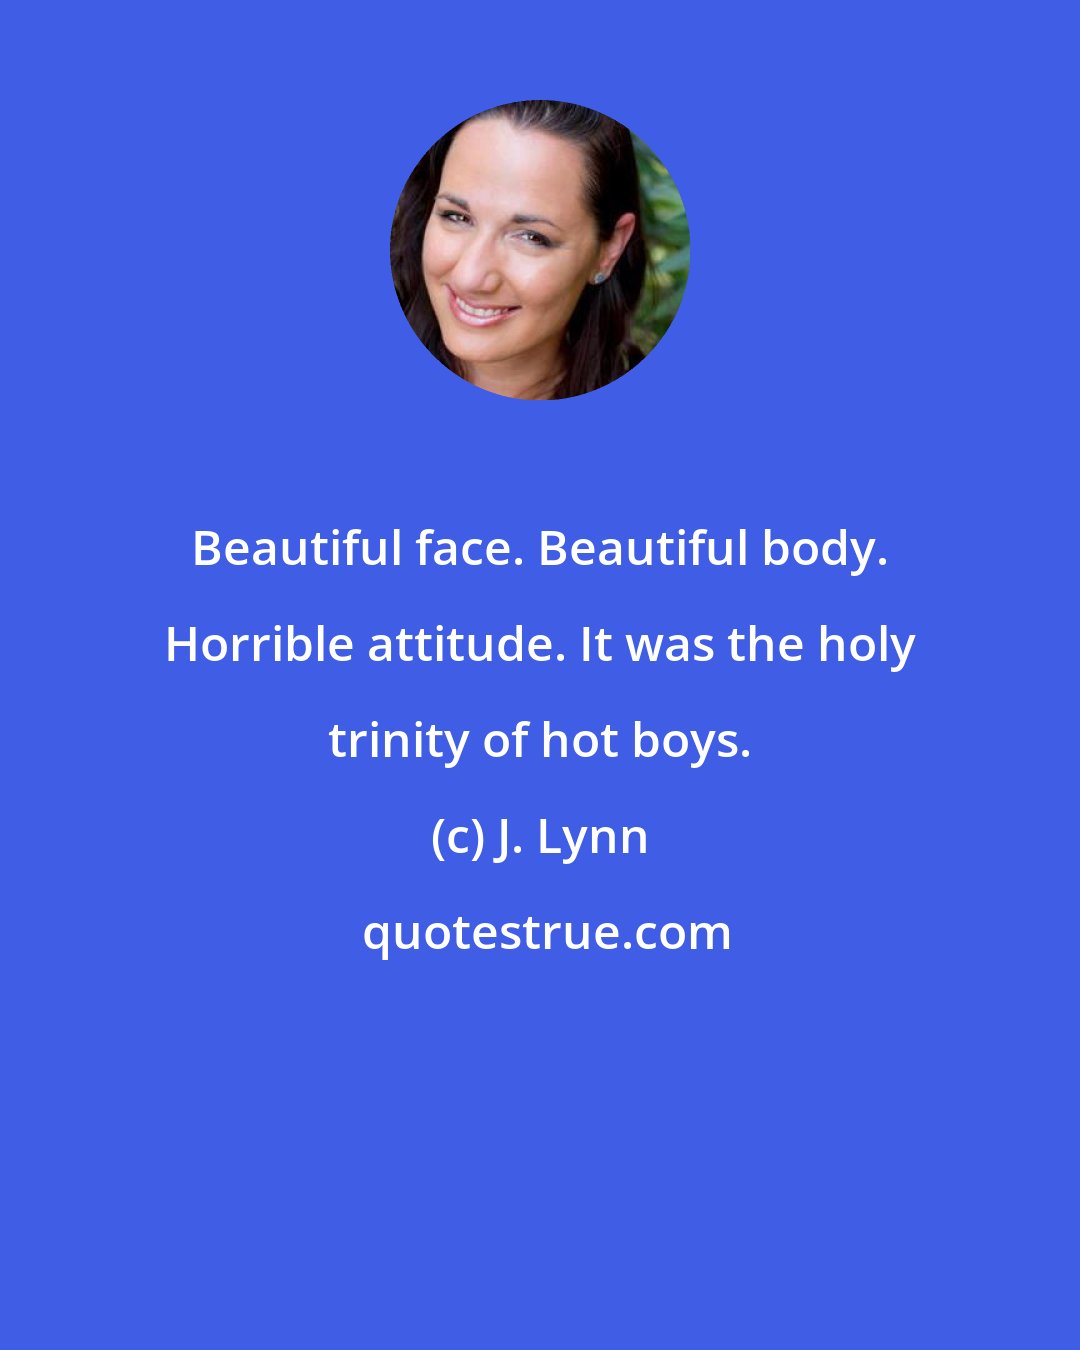 J. Lynn: Beautiful face. Beautiful body. Horrible attitude. It was the holy trinity of hot boys.